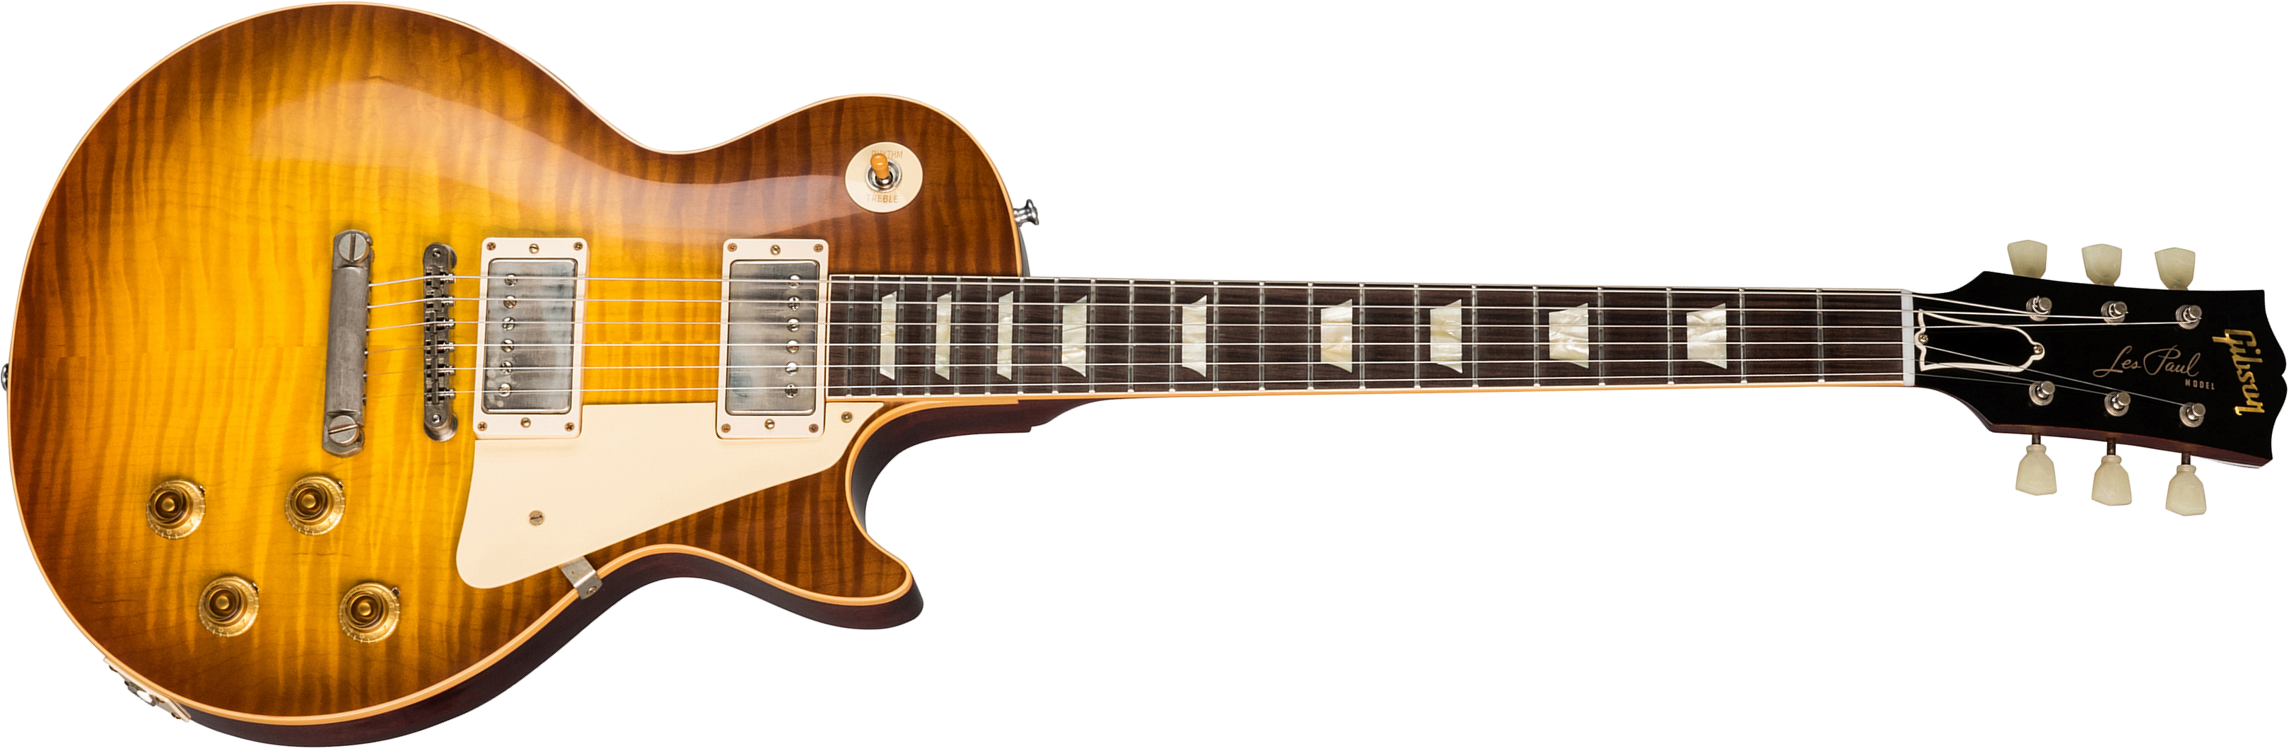 Gibson Custom Shop Les Paul Standard 1959 60th Anniversary Bolivian Rw - Vos Royal Teaburst - Single cut electric guitar - Main picture